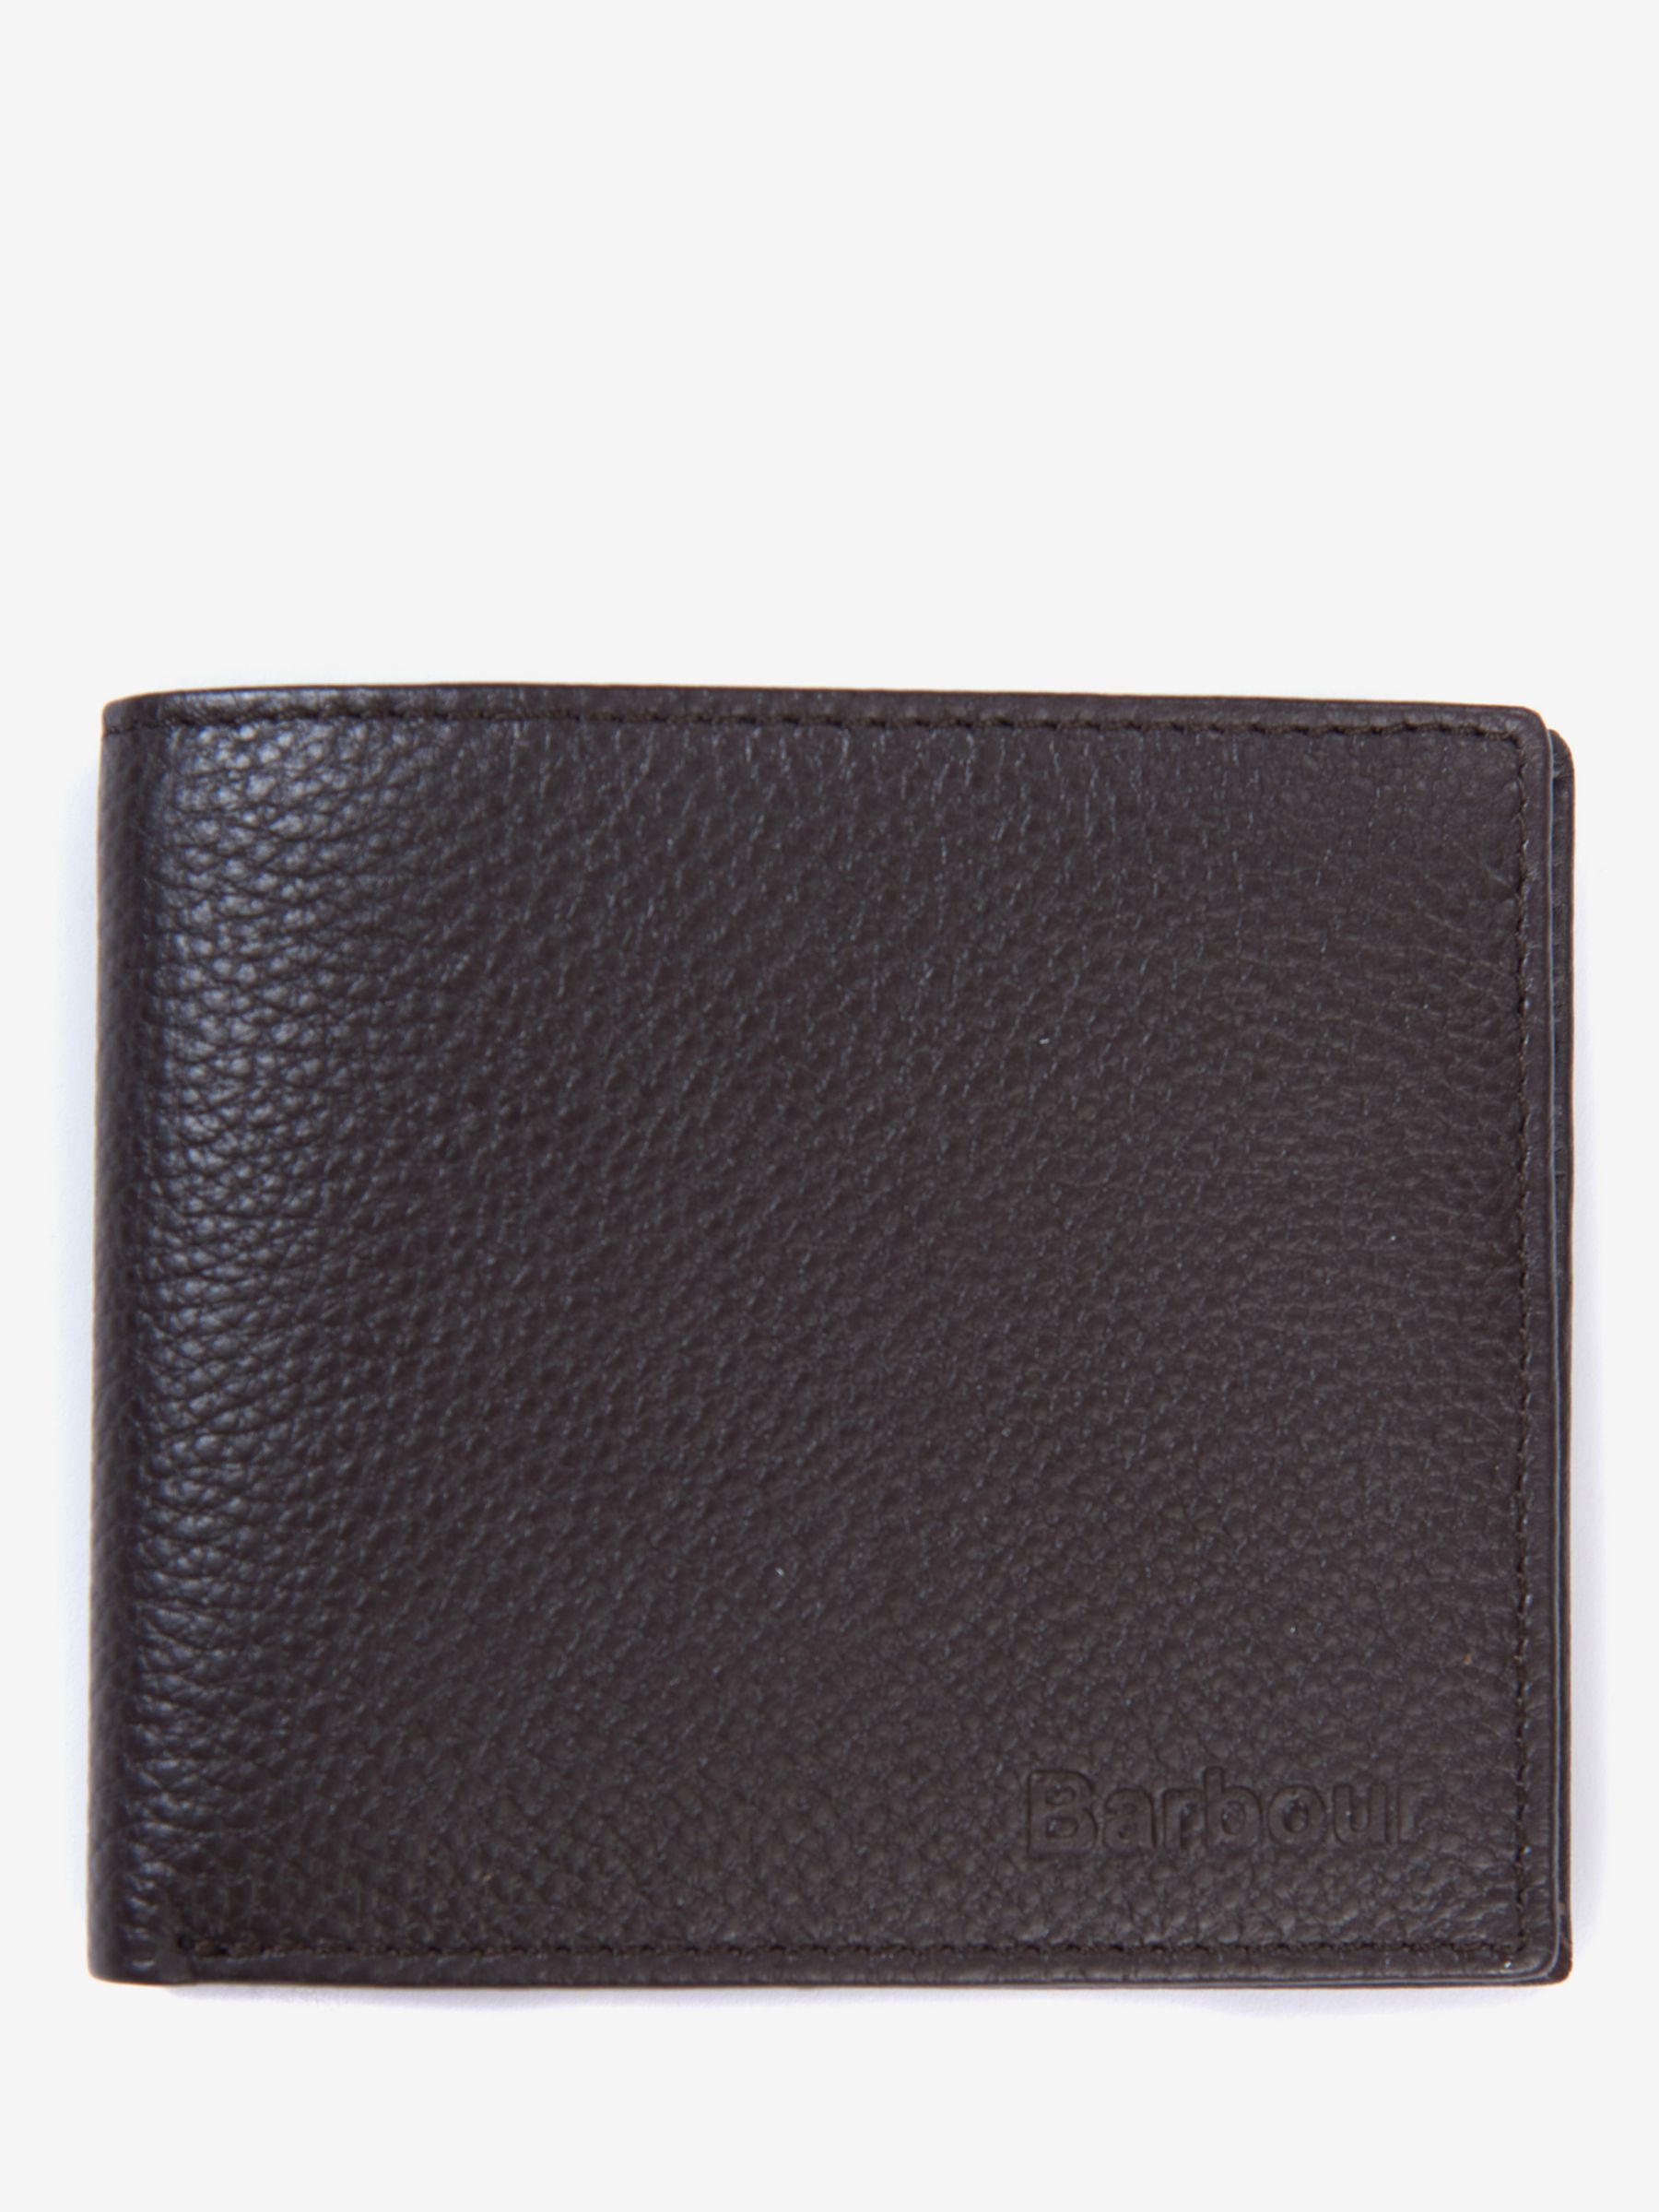 Barbour Amble Leather Billfold Wallet, Dark Brown at John Lewis & Partners